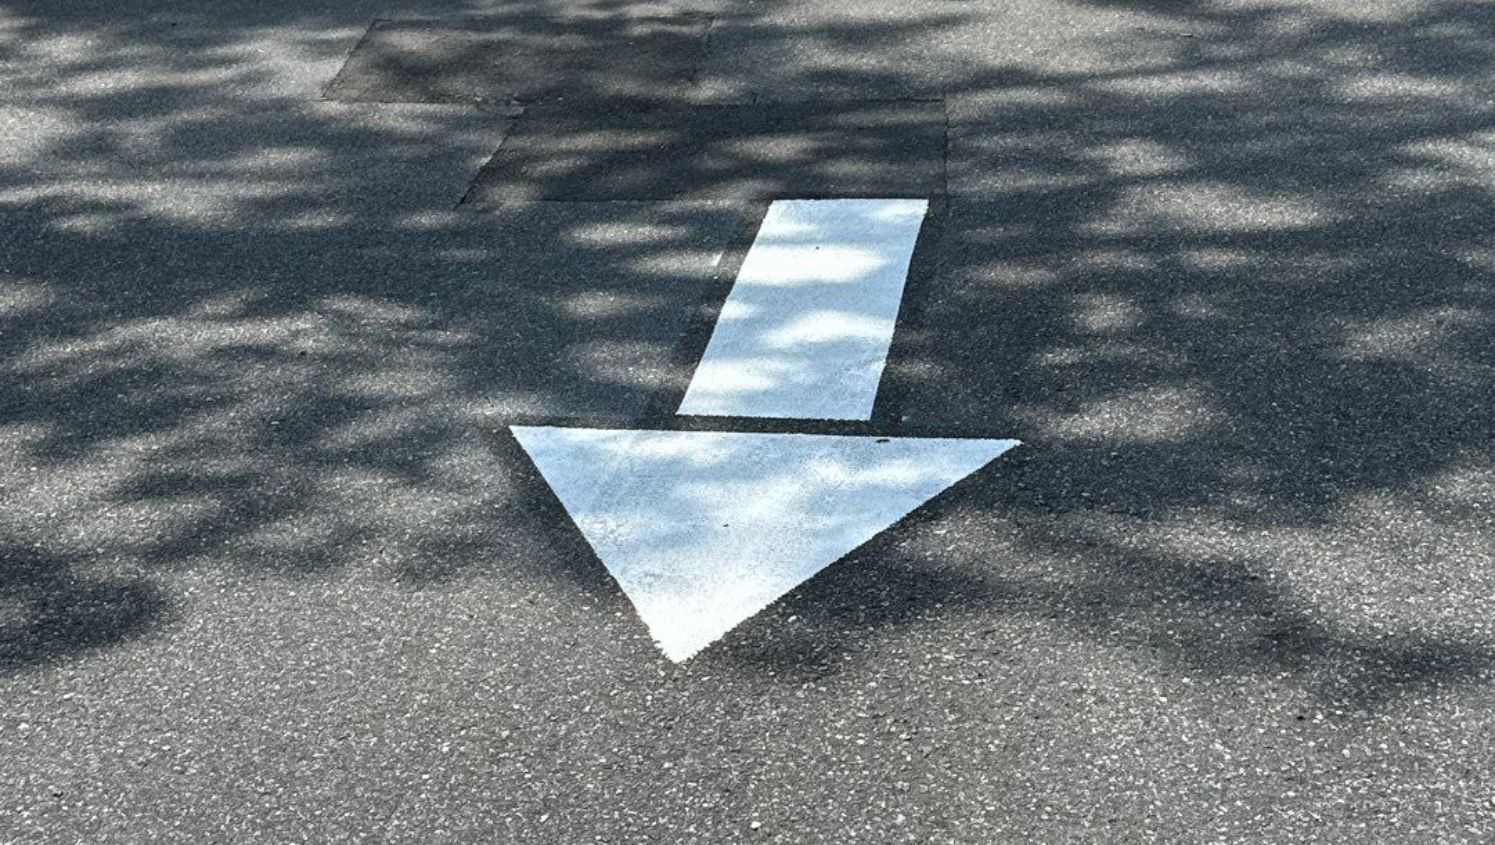 a straight arrow painted on the street